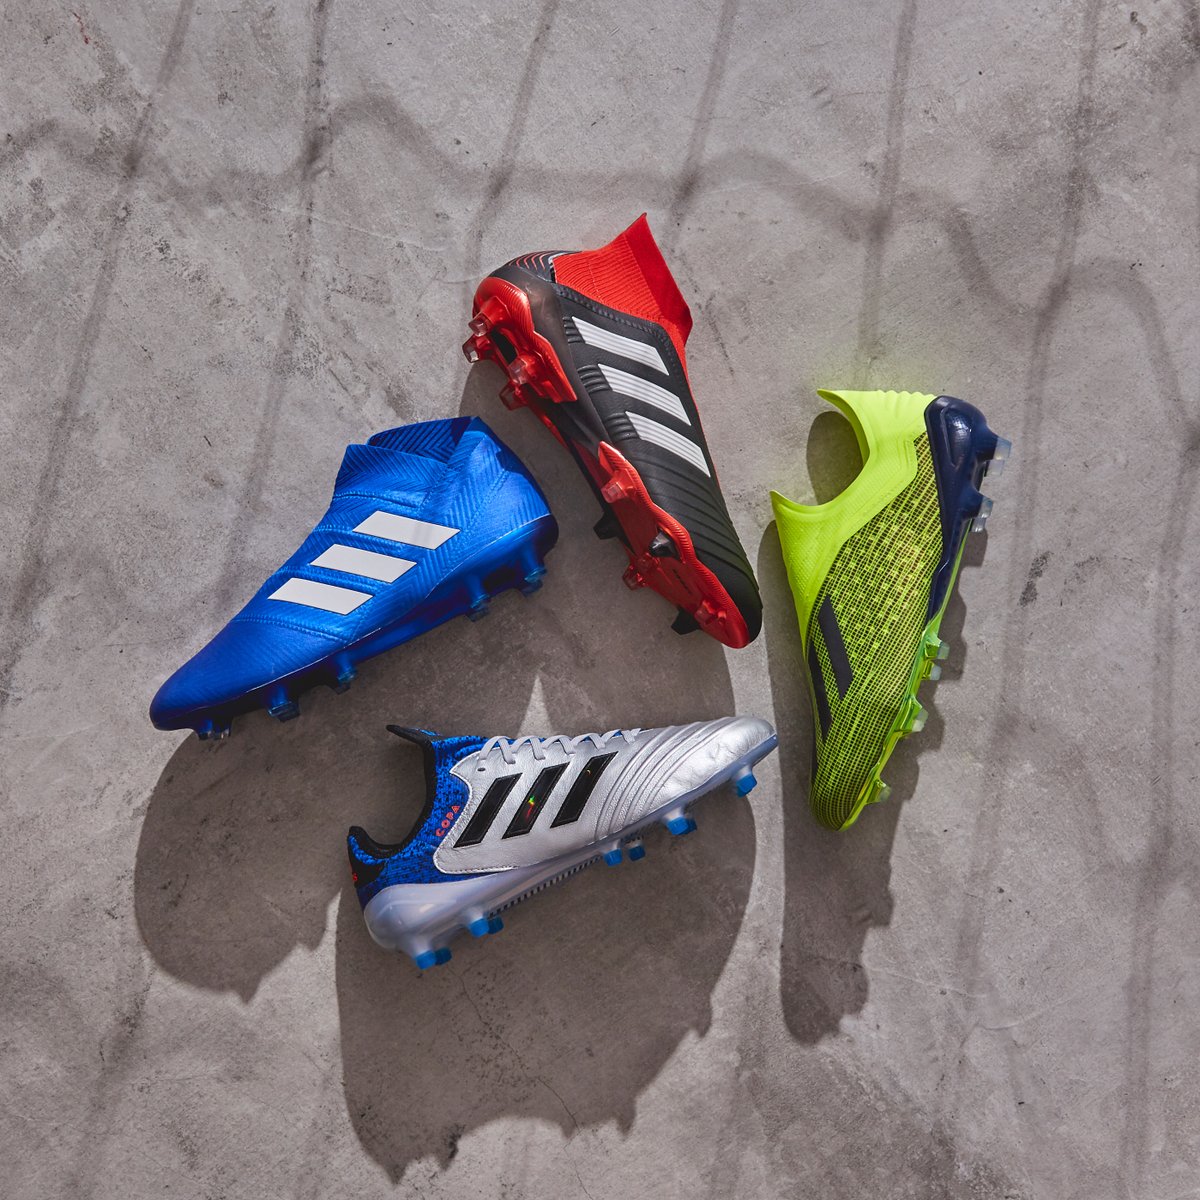 Órgano digestivo grua Sofocar New Predator, X, Nemeziz, Messi and Copa: Adidas Team Mode Pack Released -  Footy Headlines